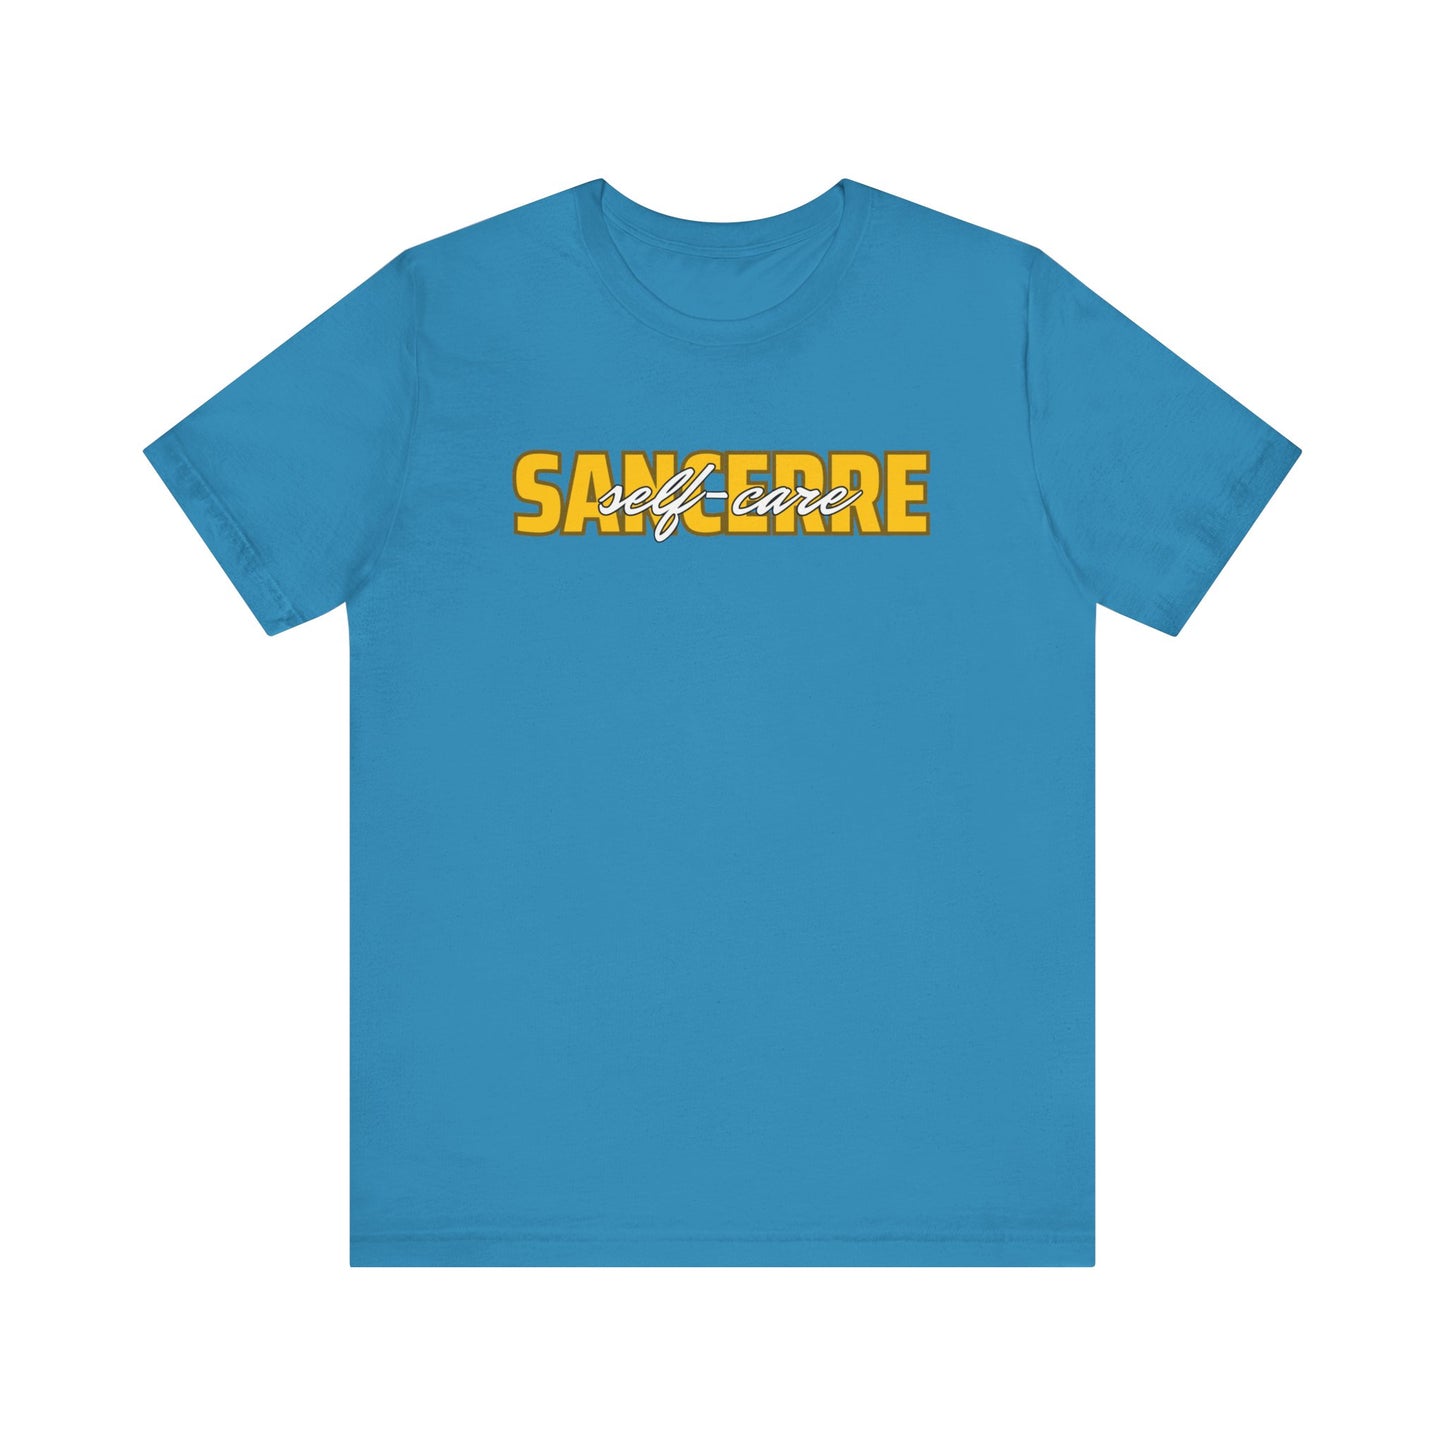 Sancerre Self-care Short Sleeve Tee